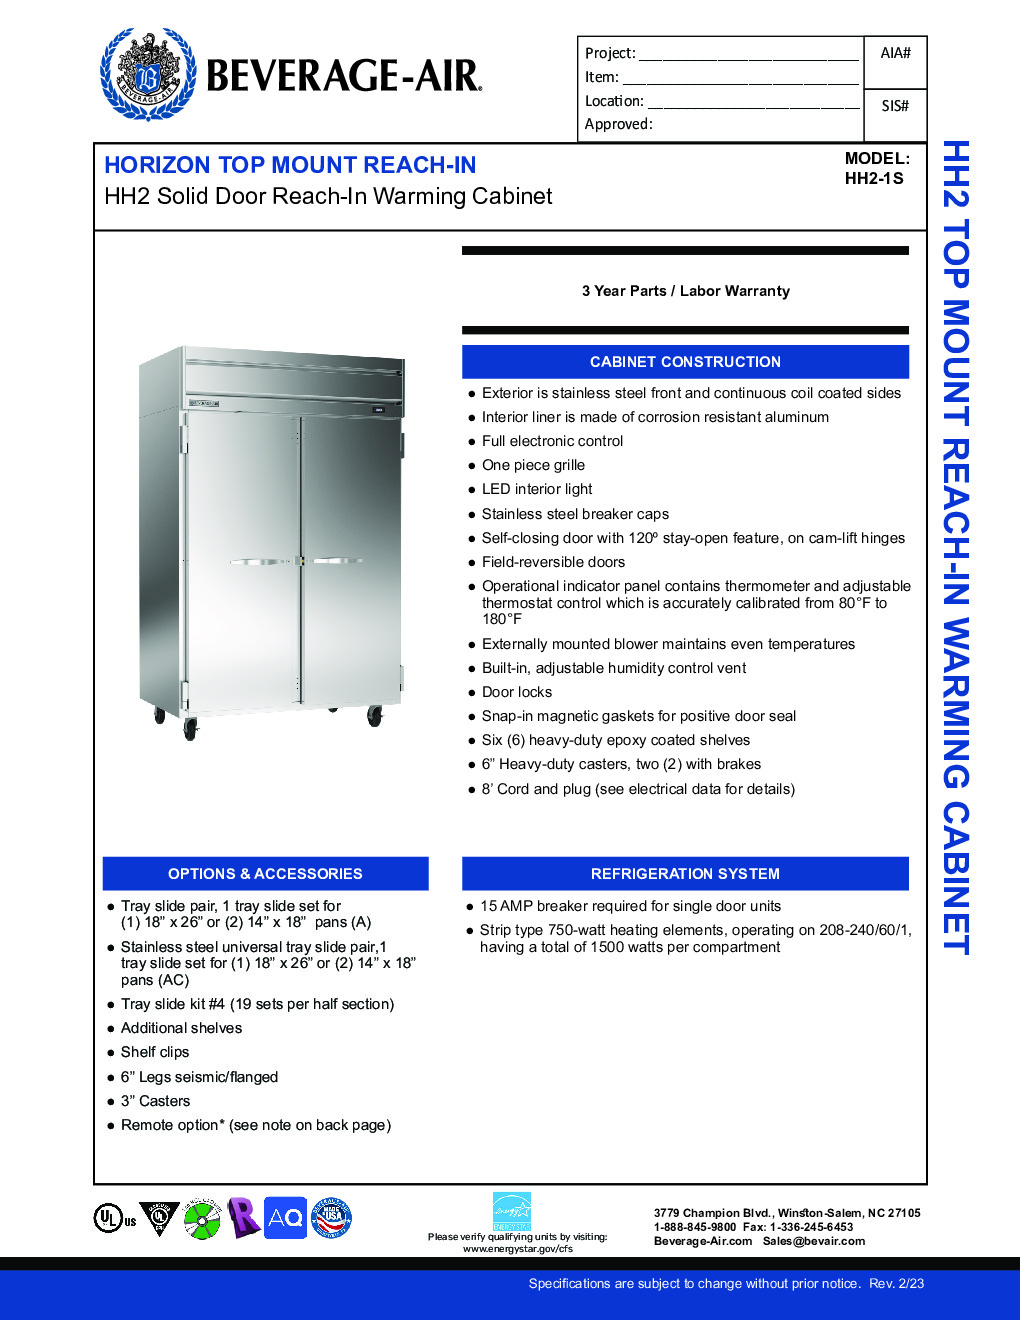 Beverage Air HH2-1S Reach-In Heated Cabinet